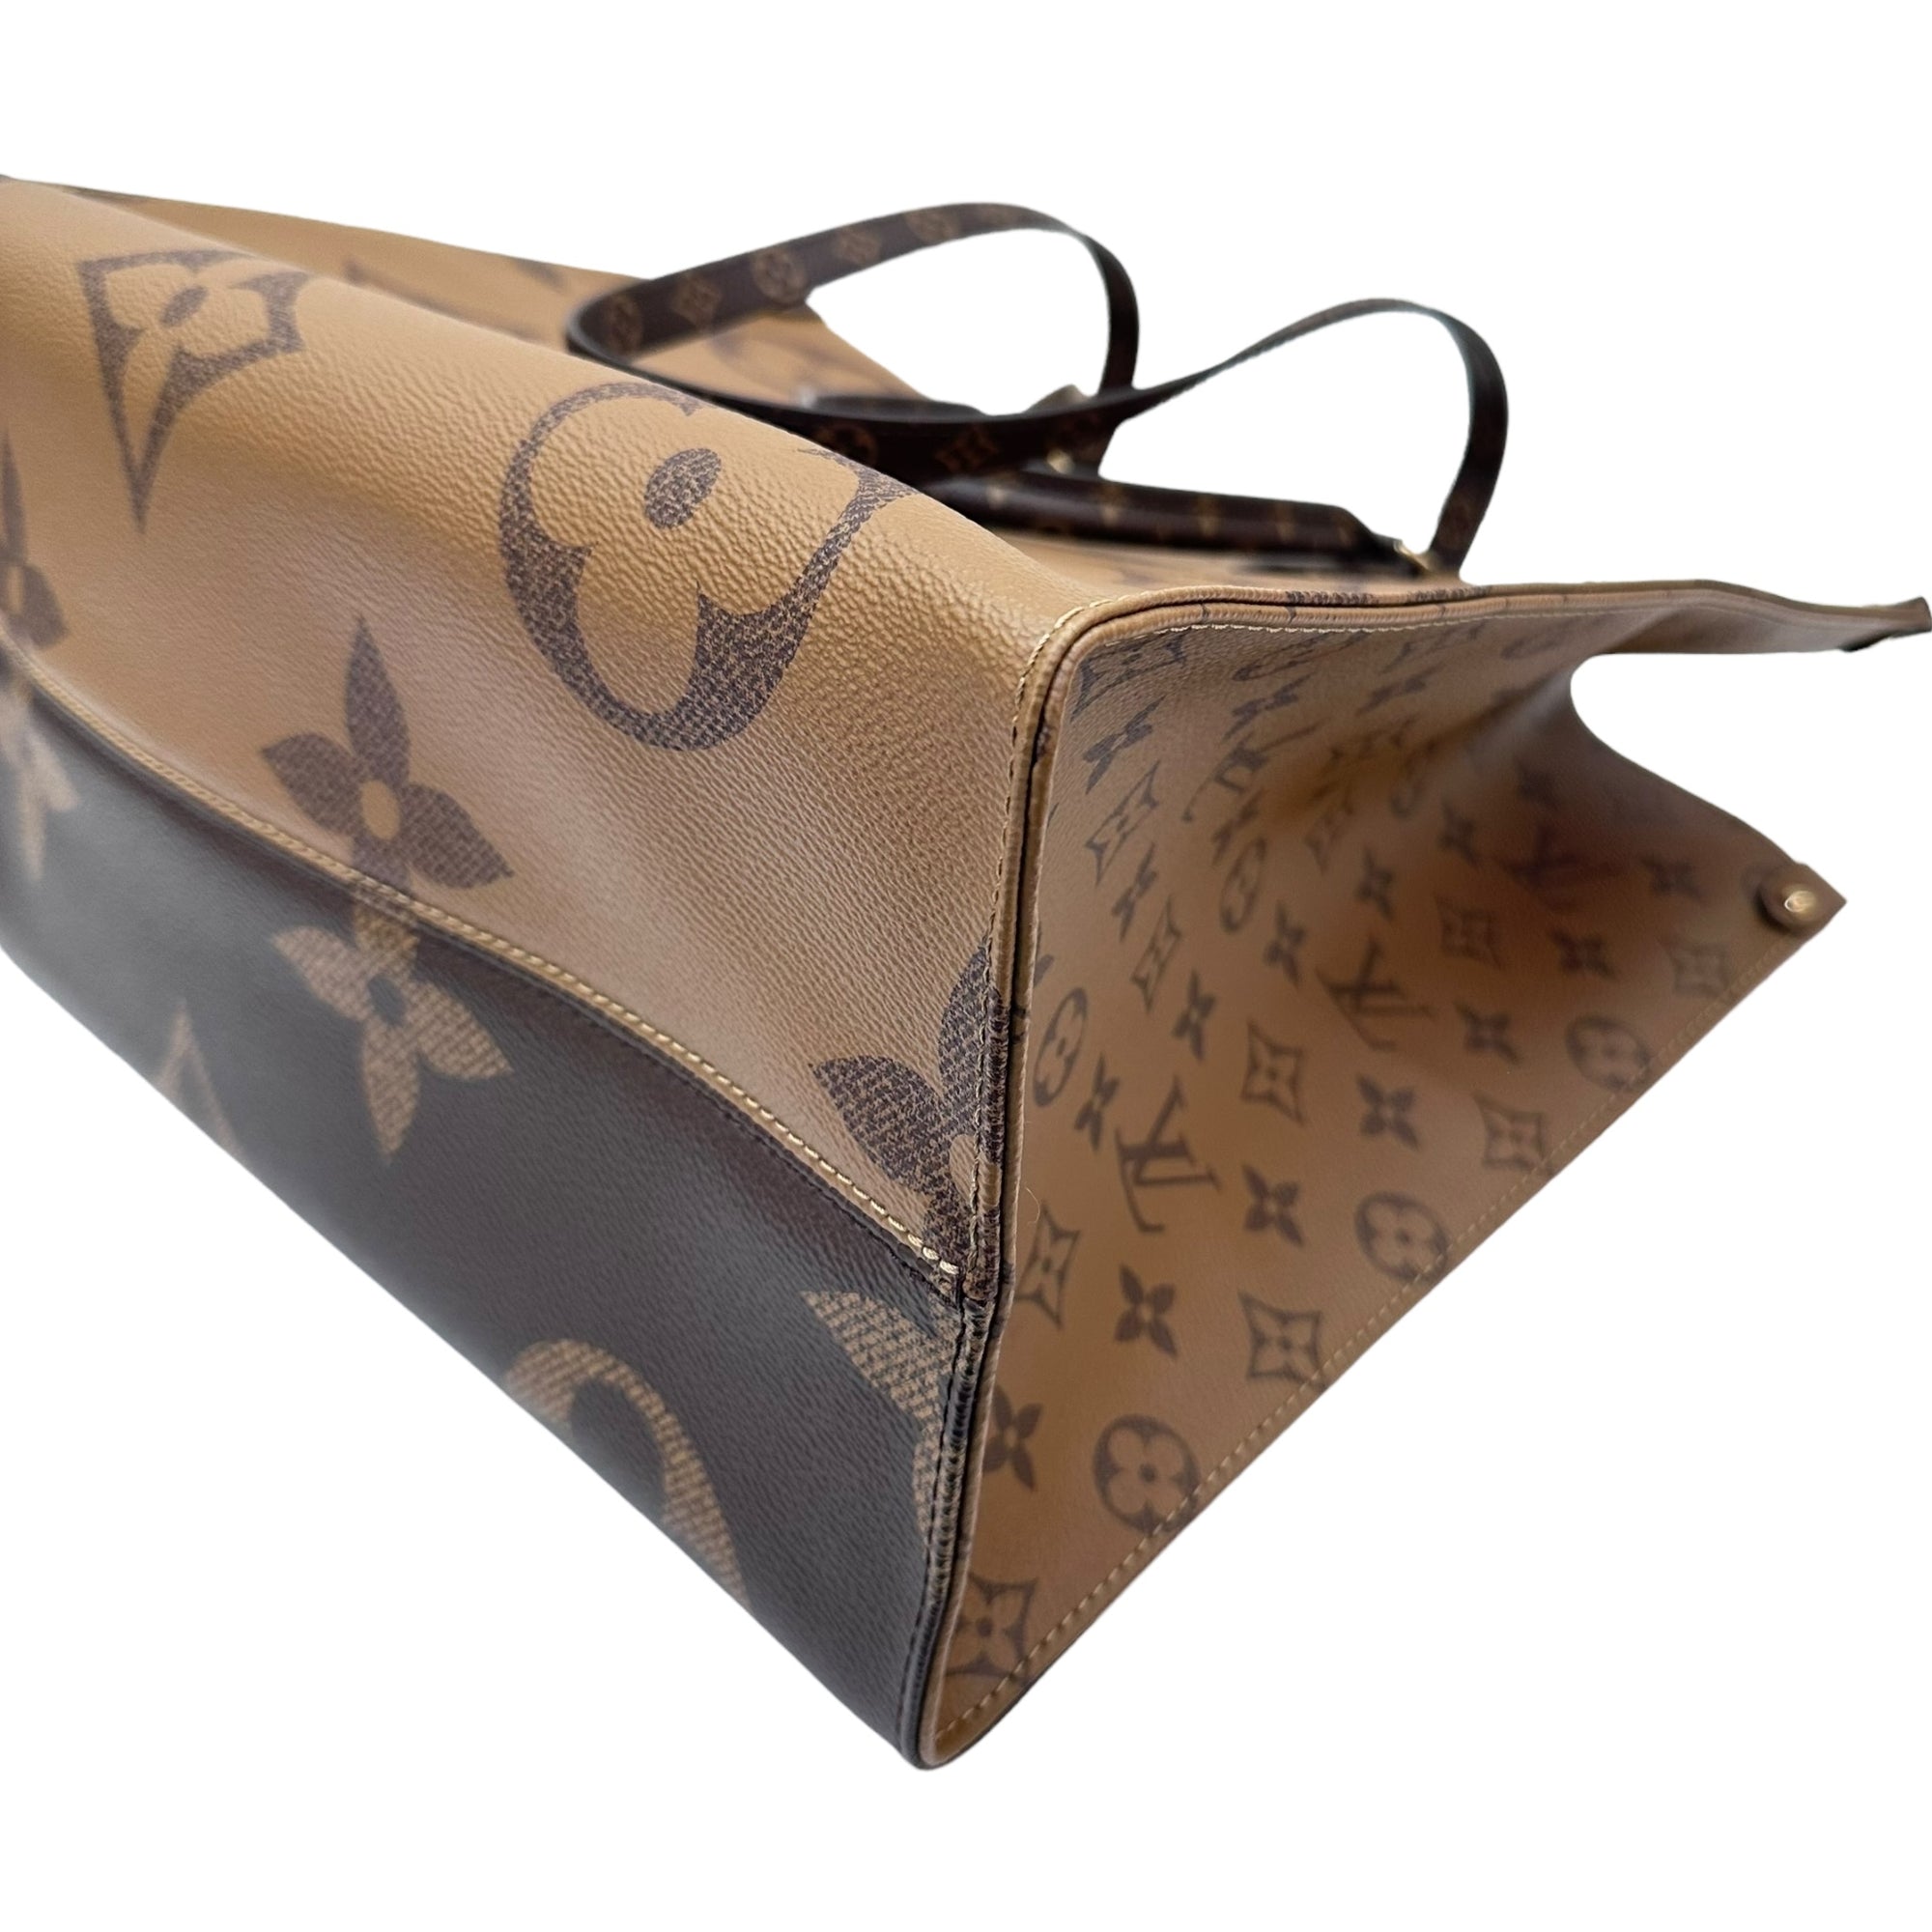 Louis Vuitton Monogram Reverse Giant OnTheGo GM Tote Bag